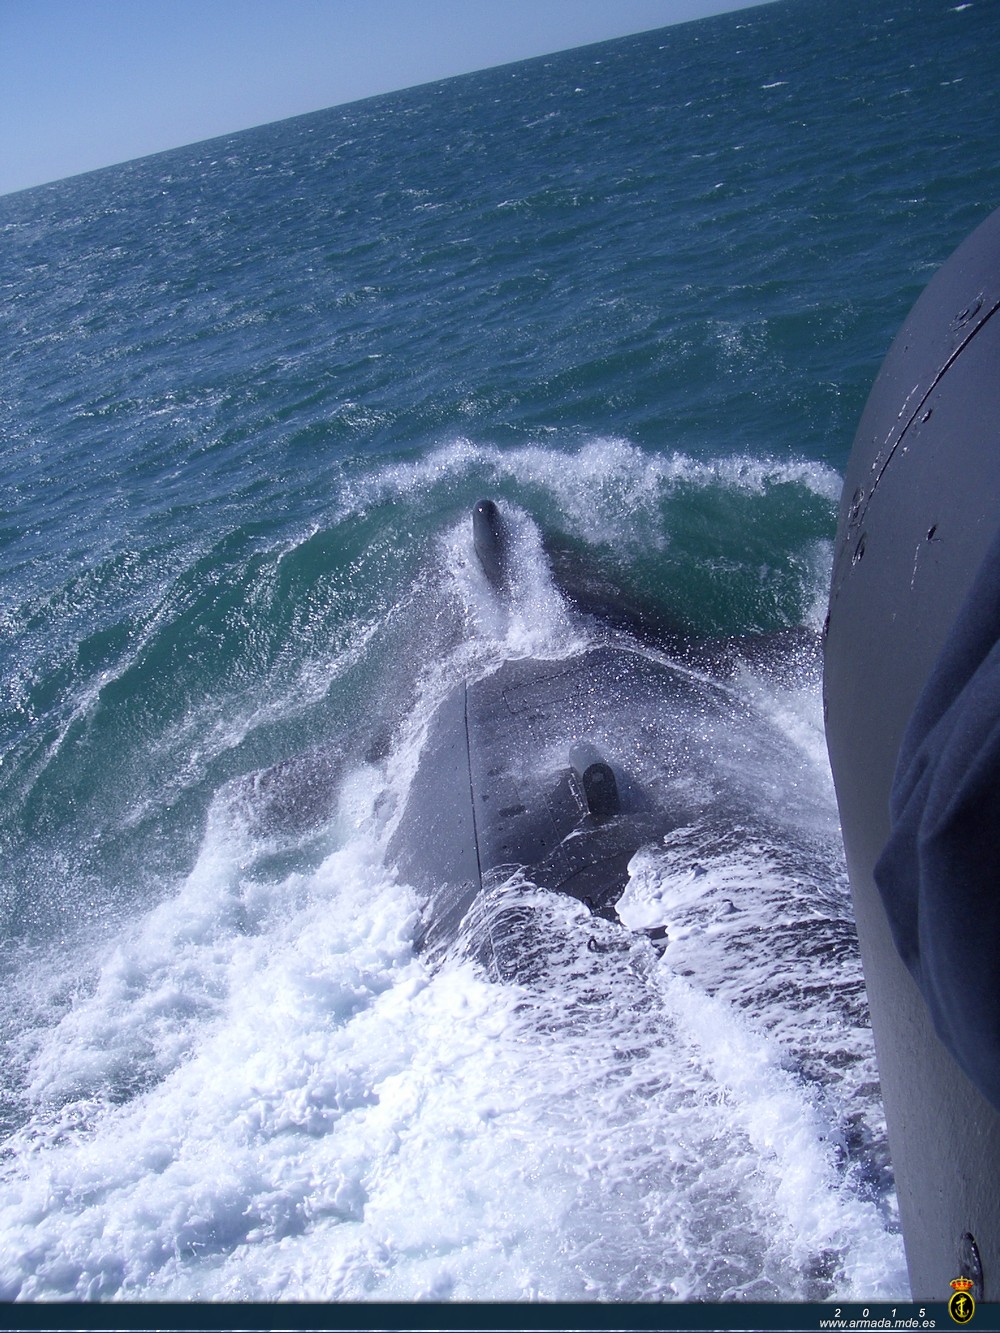 Submarino tipo 70